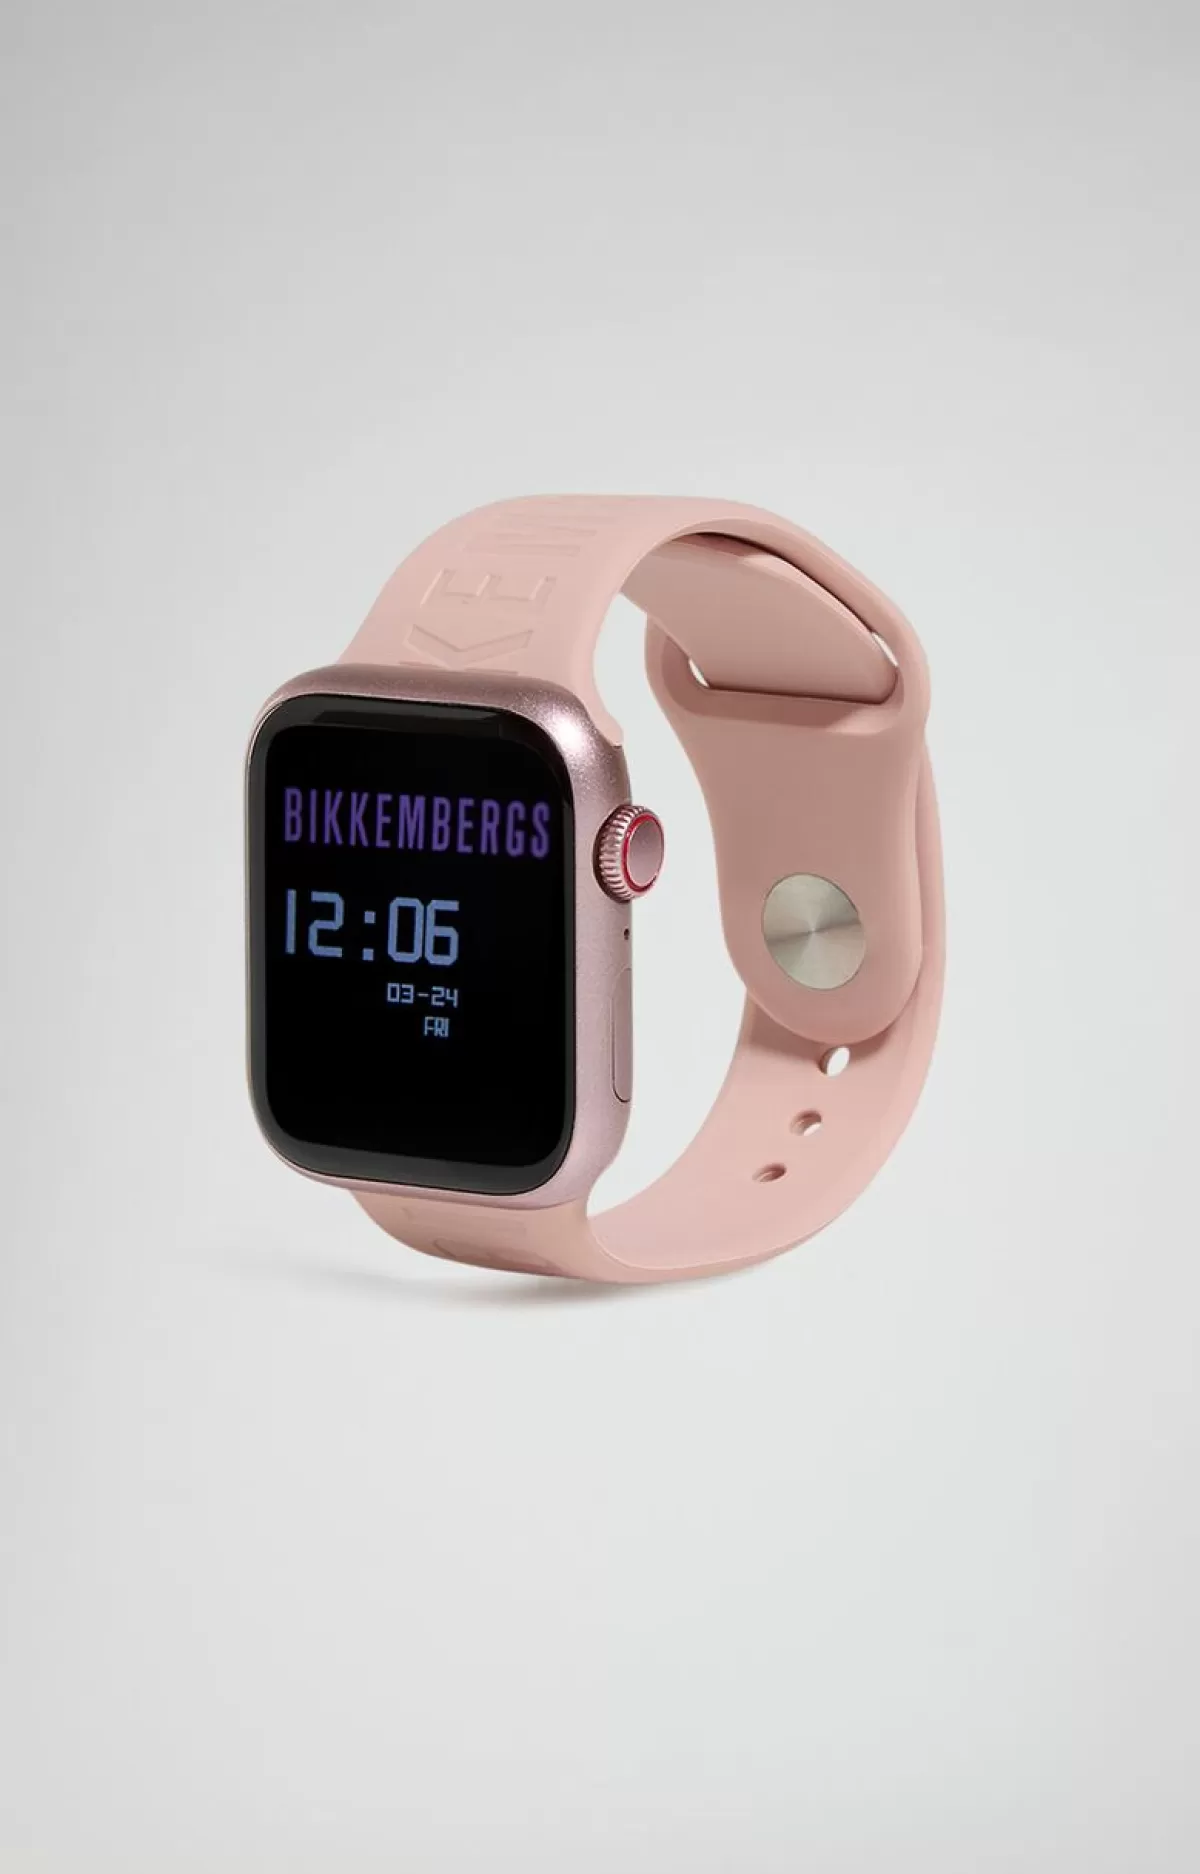 Bikkembergs Smartwatch Wireless Charging White Flash Sale